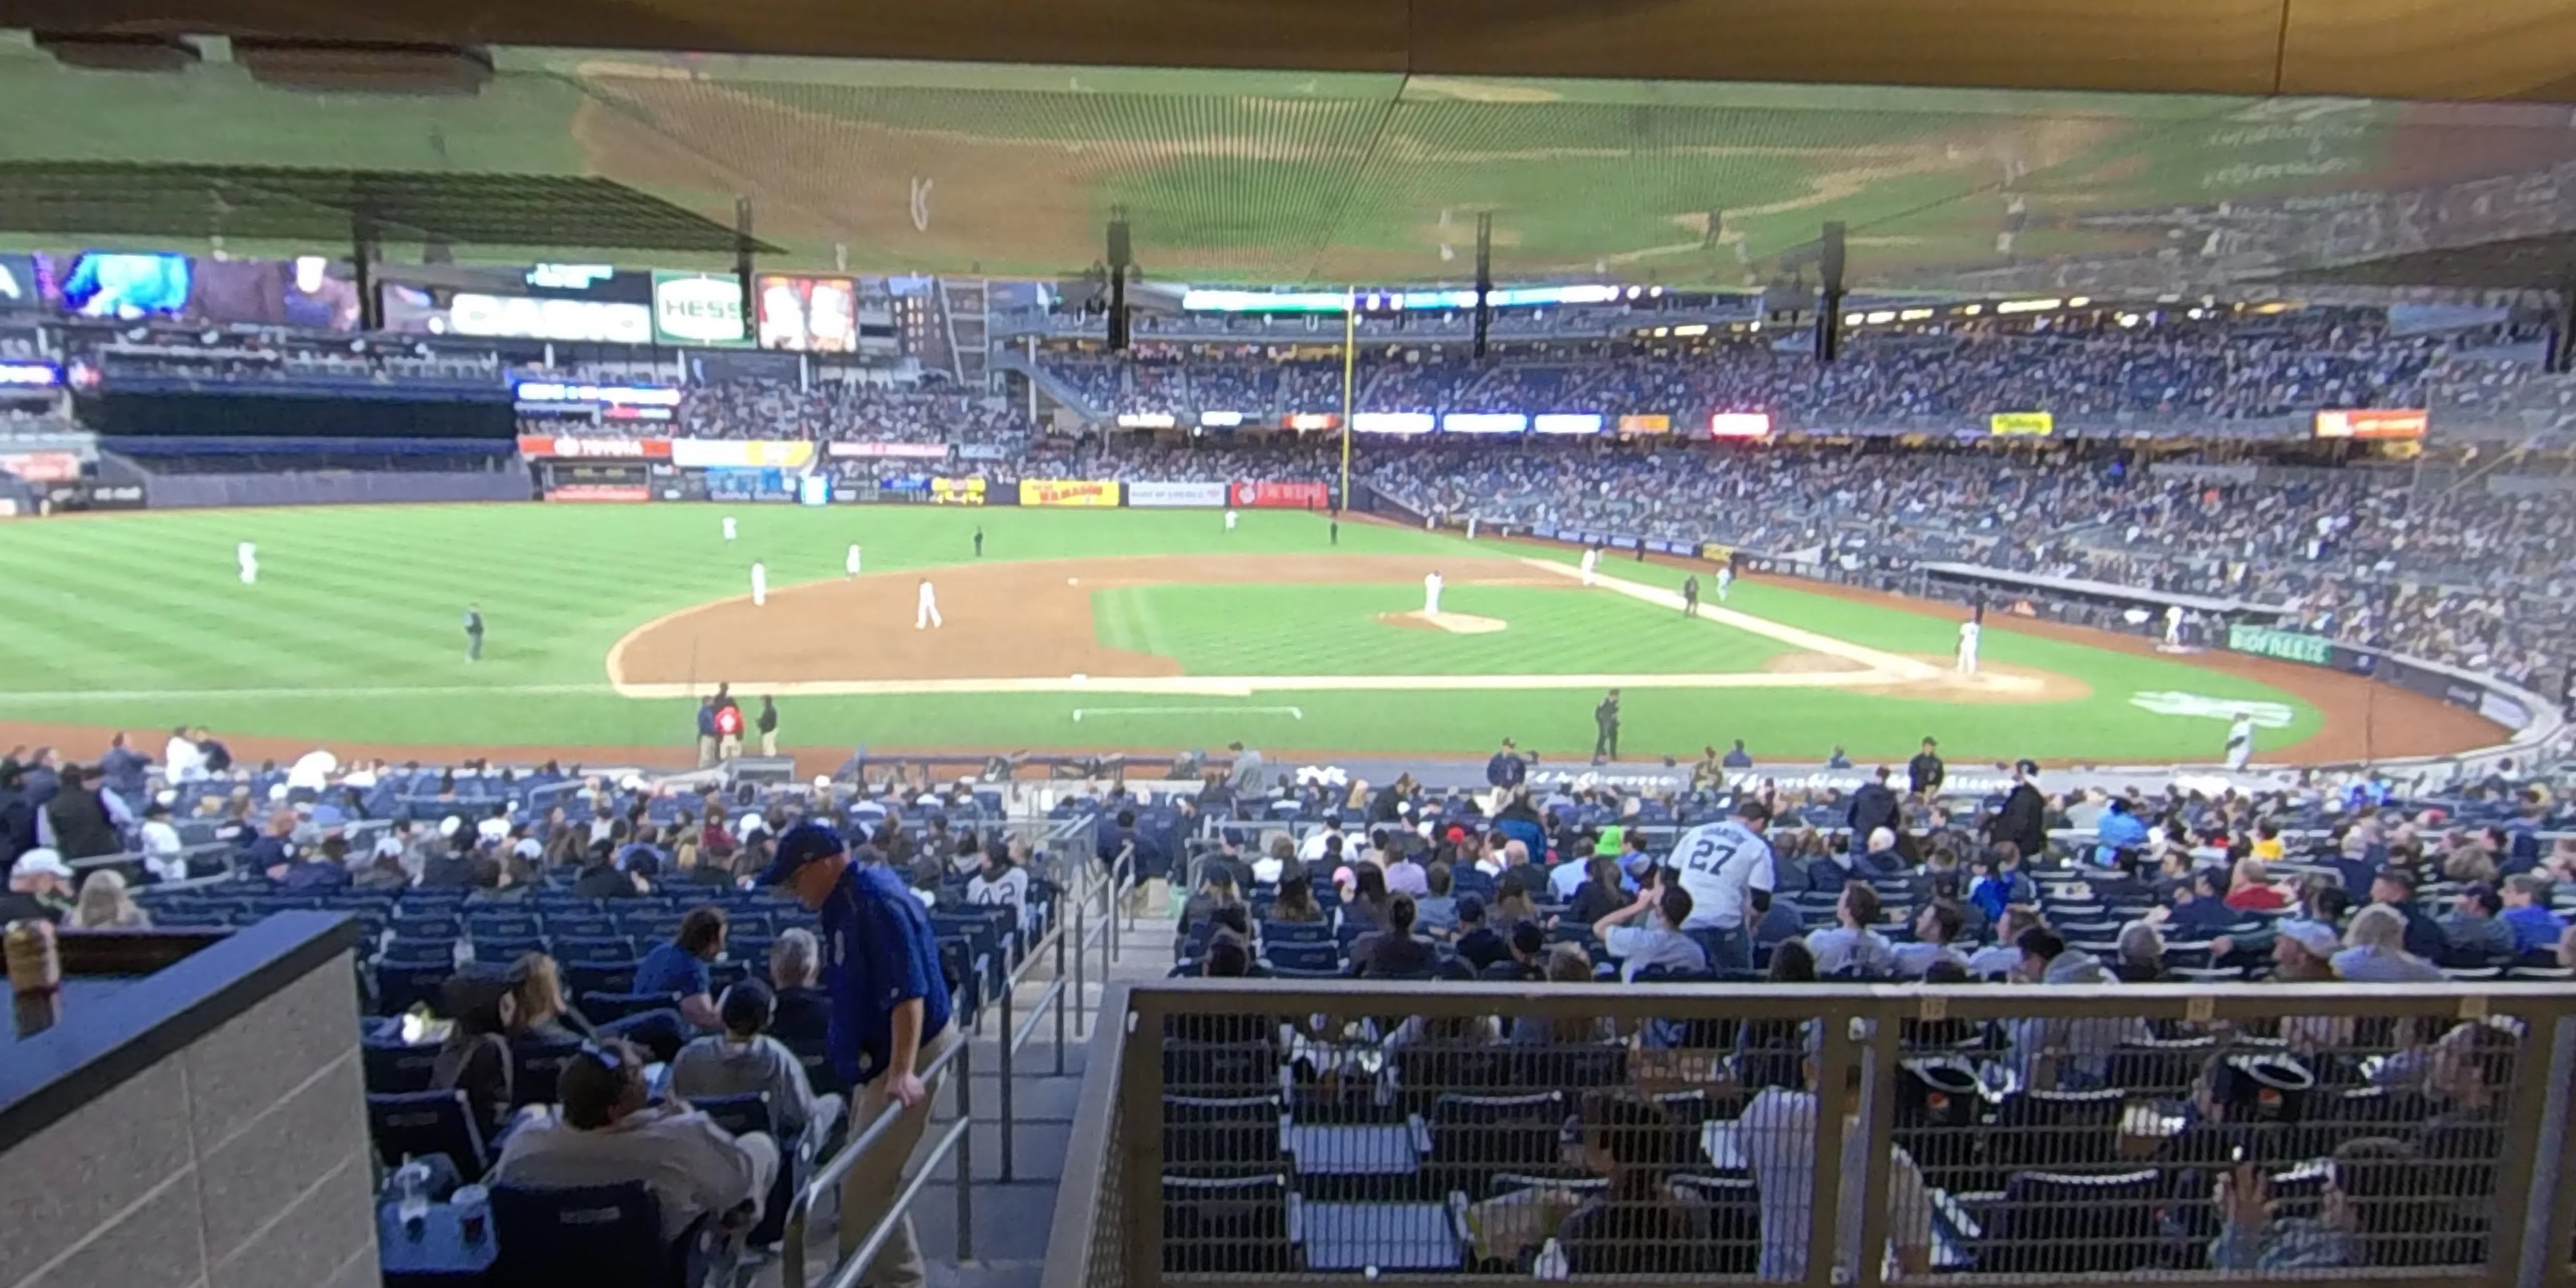 section 124 panoramic seat view  for baseball - yankee stadium